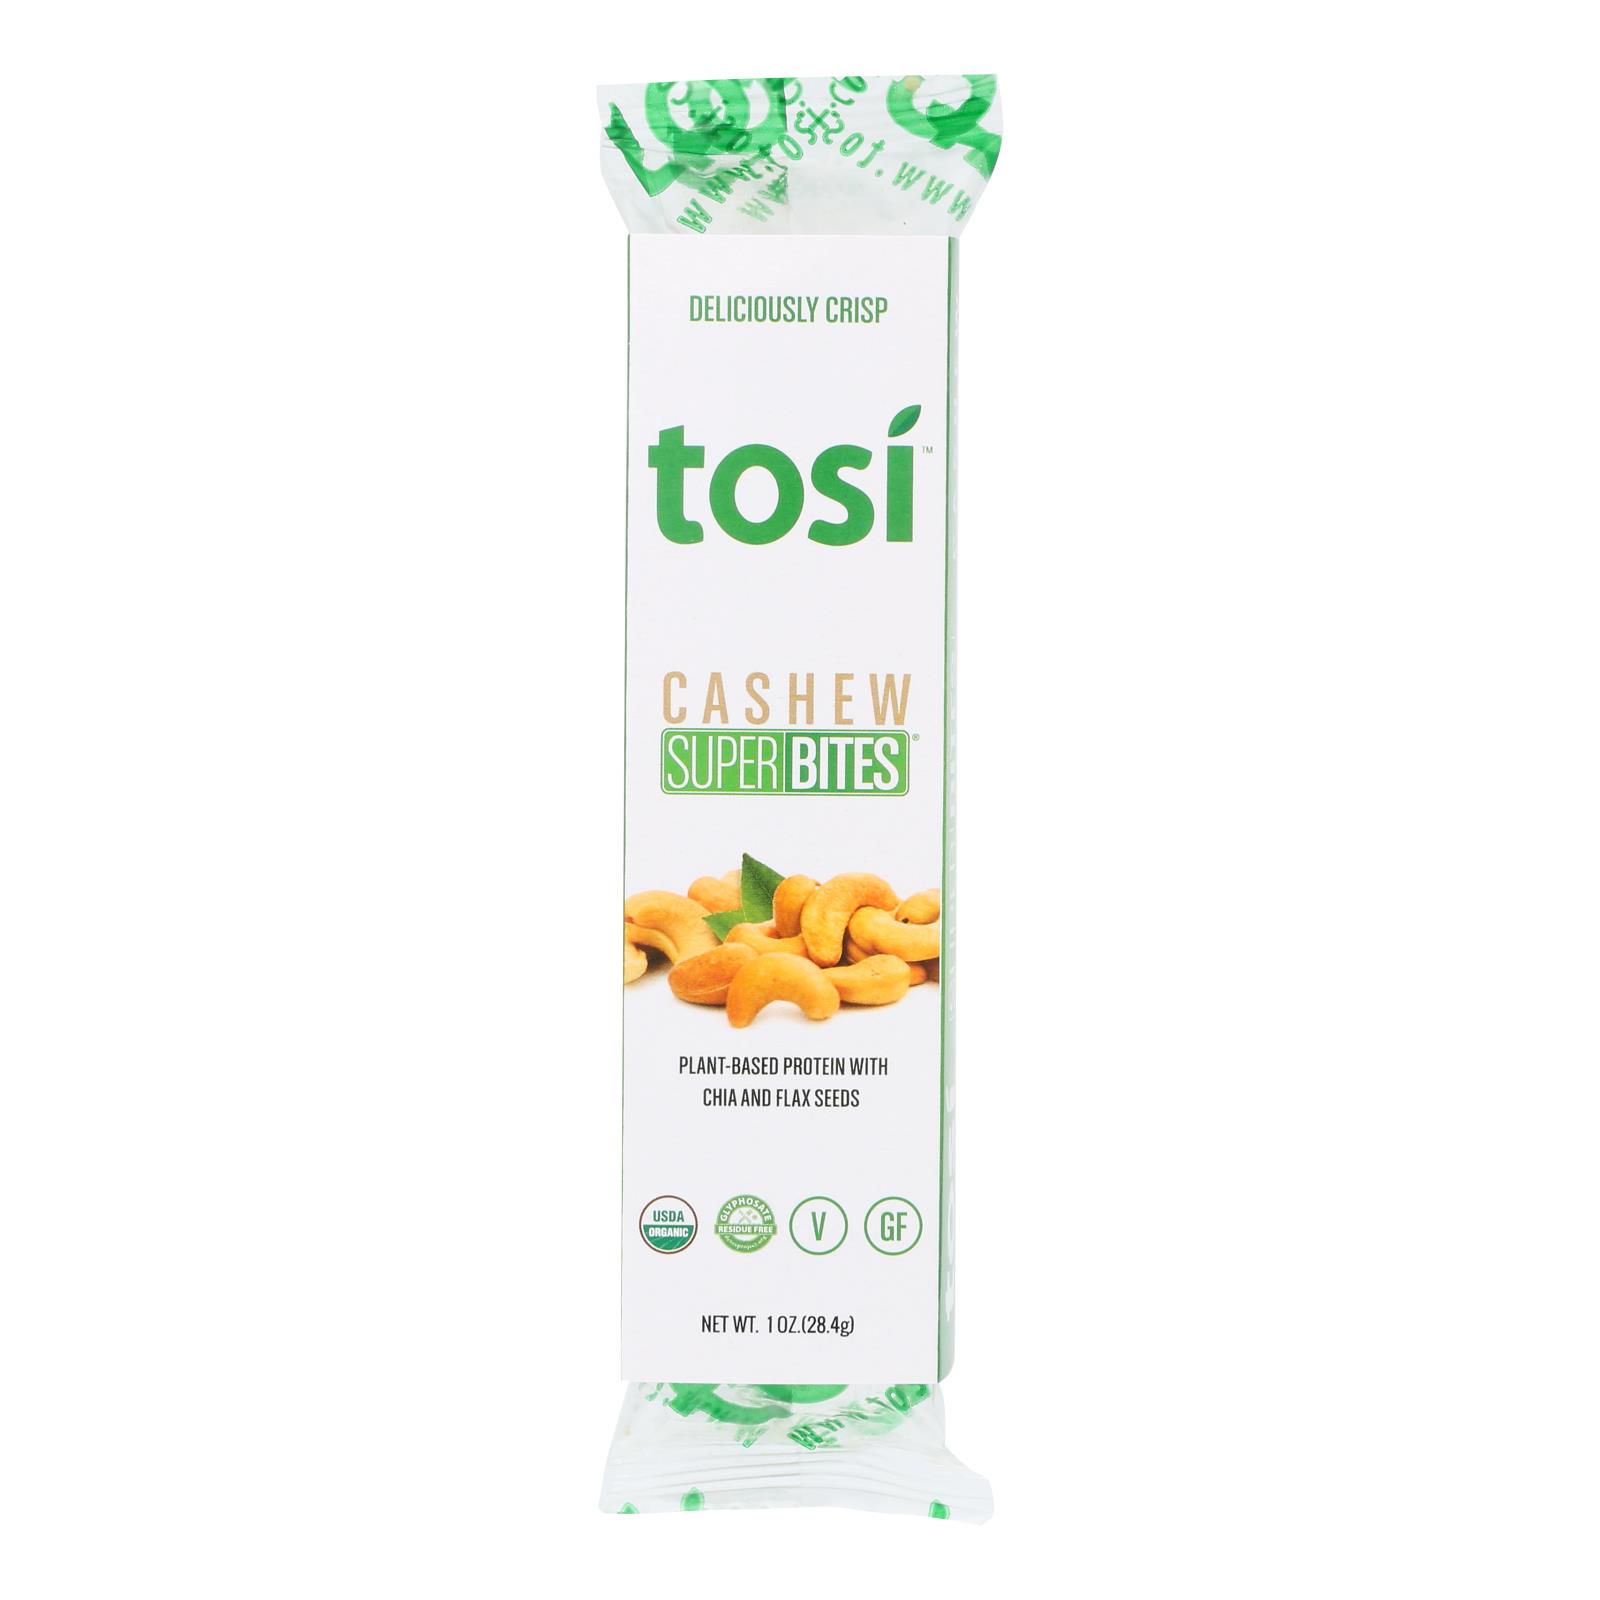 Tosi - Super Bites Cashew - 12개 묶음상품 - 1 OZ